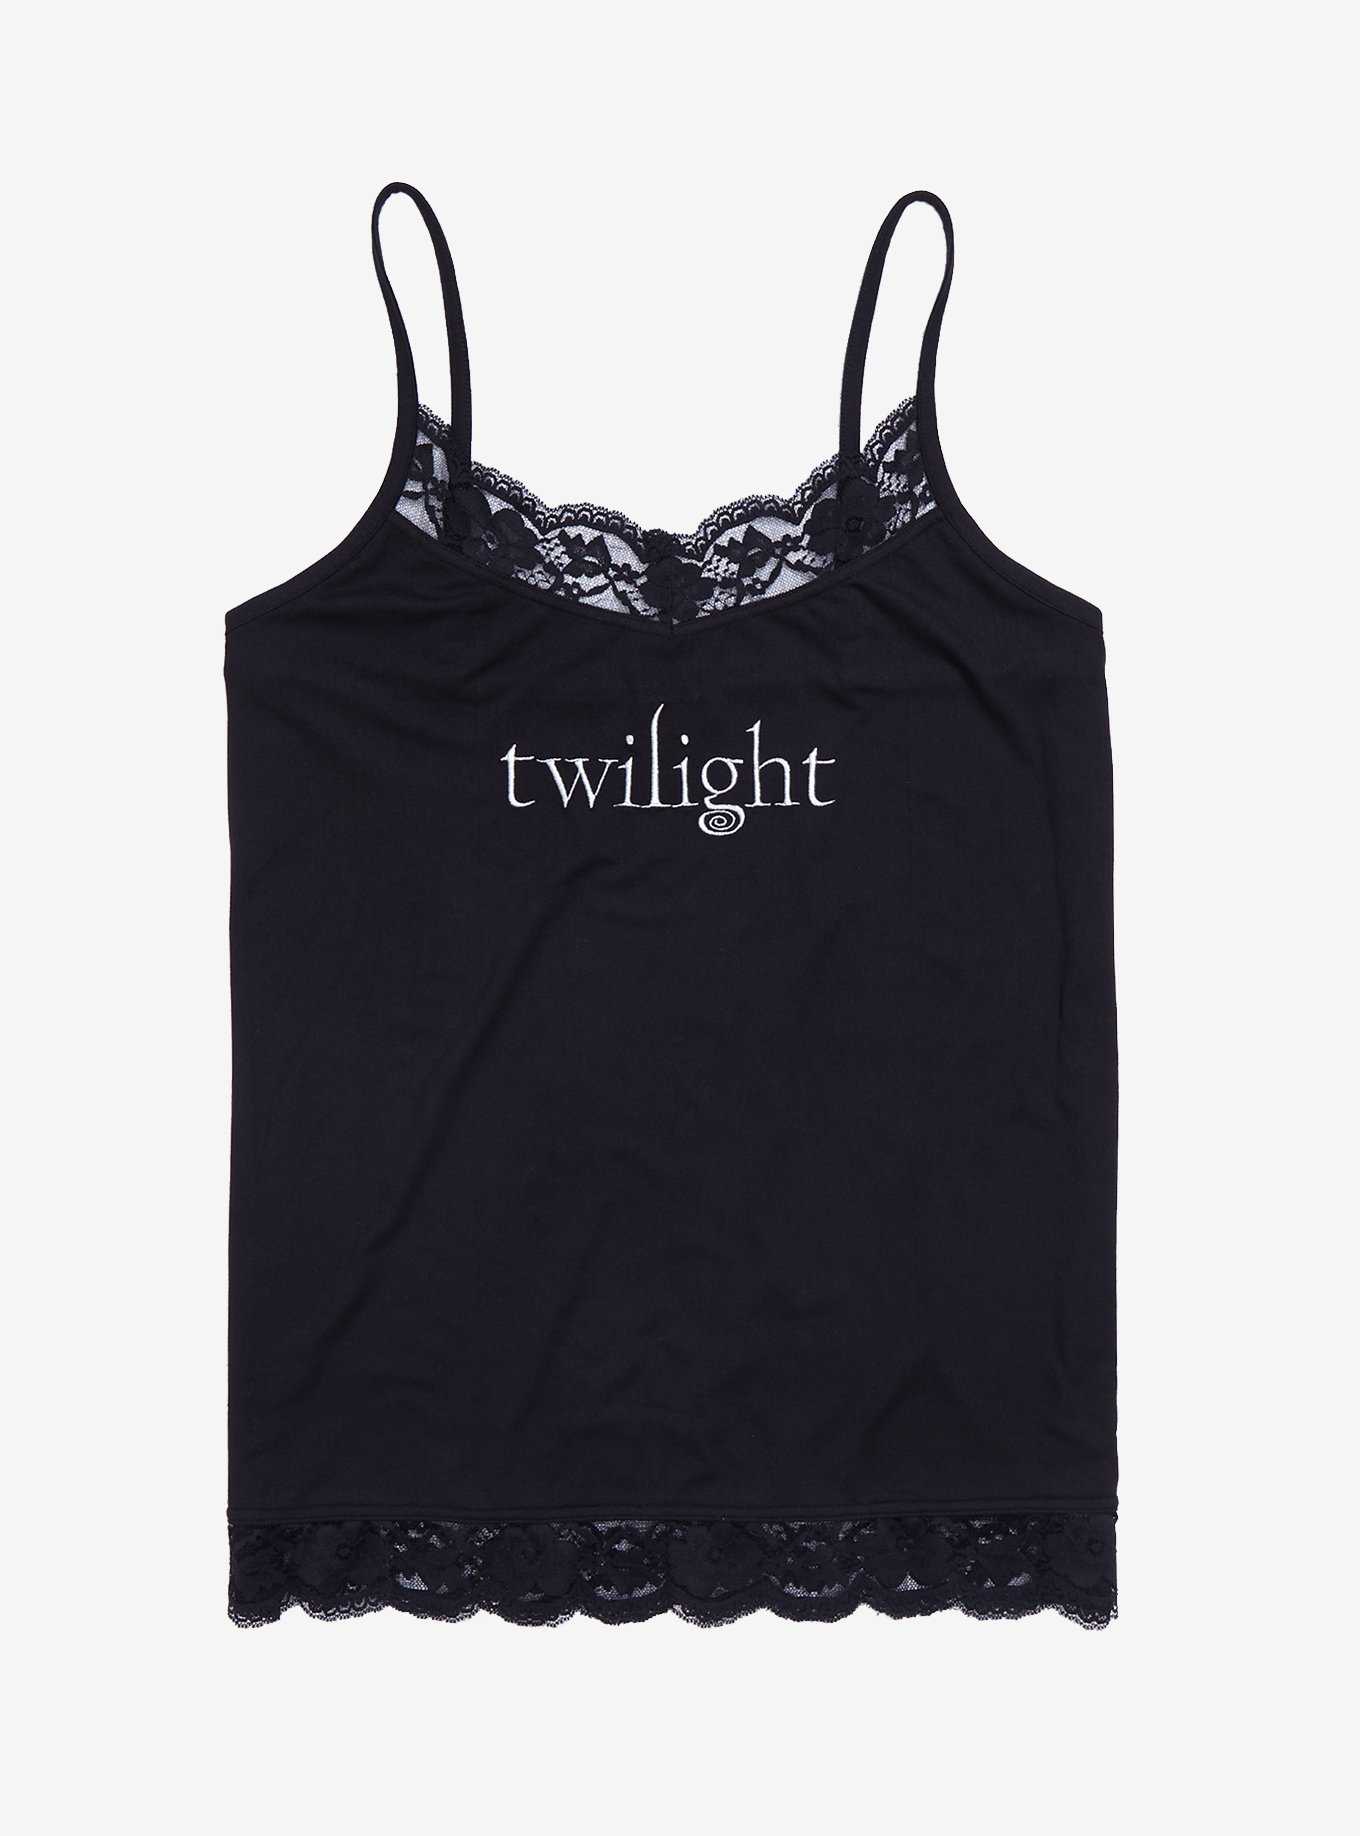 Twilight - Movie Poster Capsleeve T-Shirt - Sizes S - XXL - Vampire -  Romance